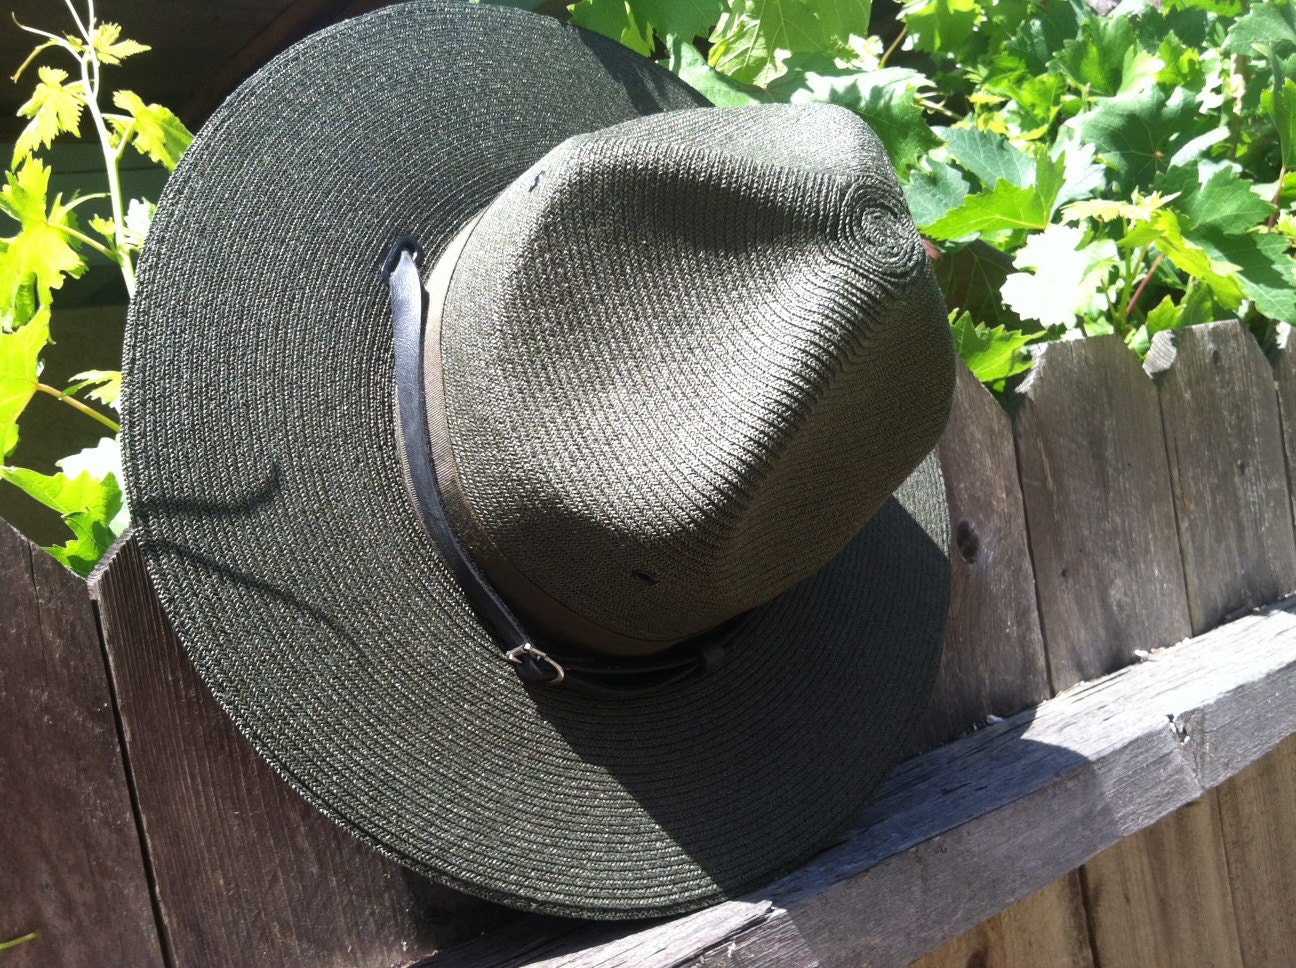 The Lawman Genuine Milan custom campaign hat